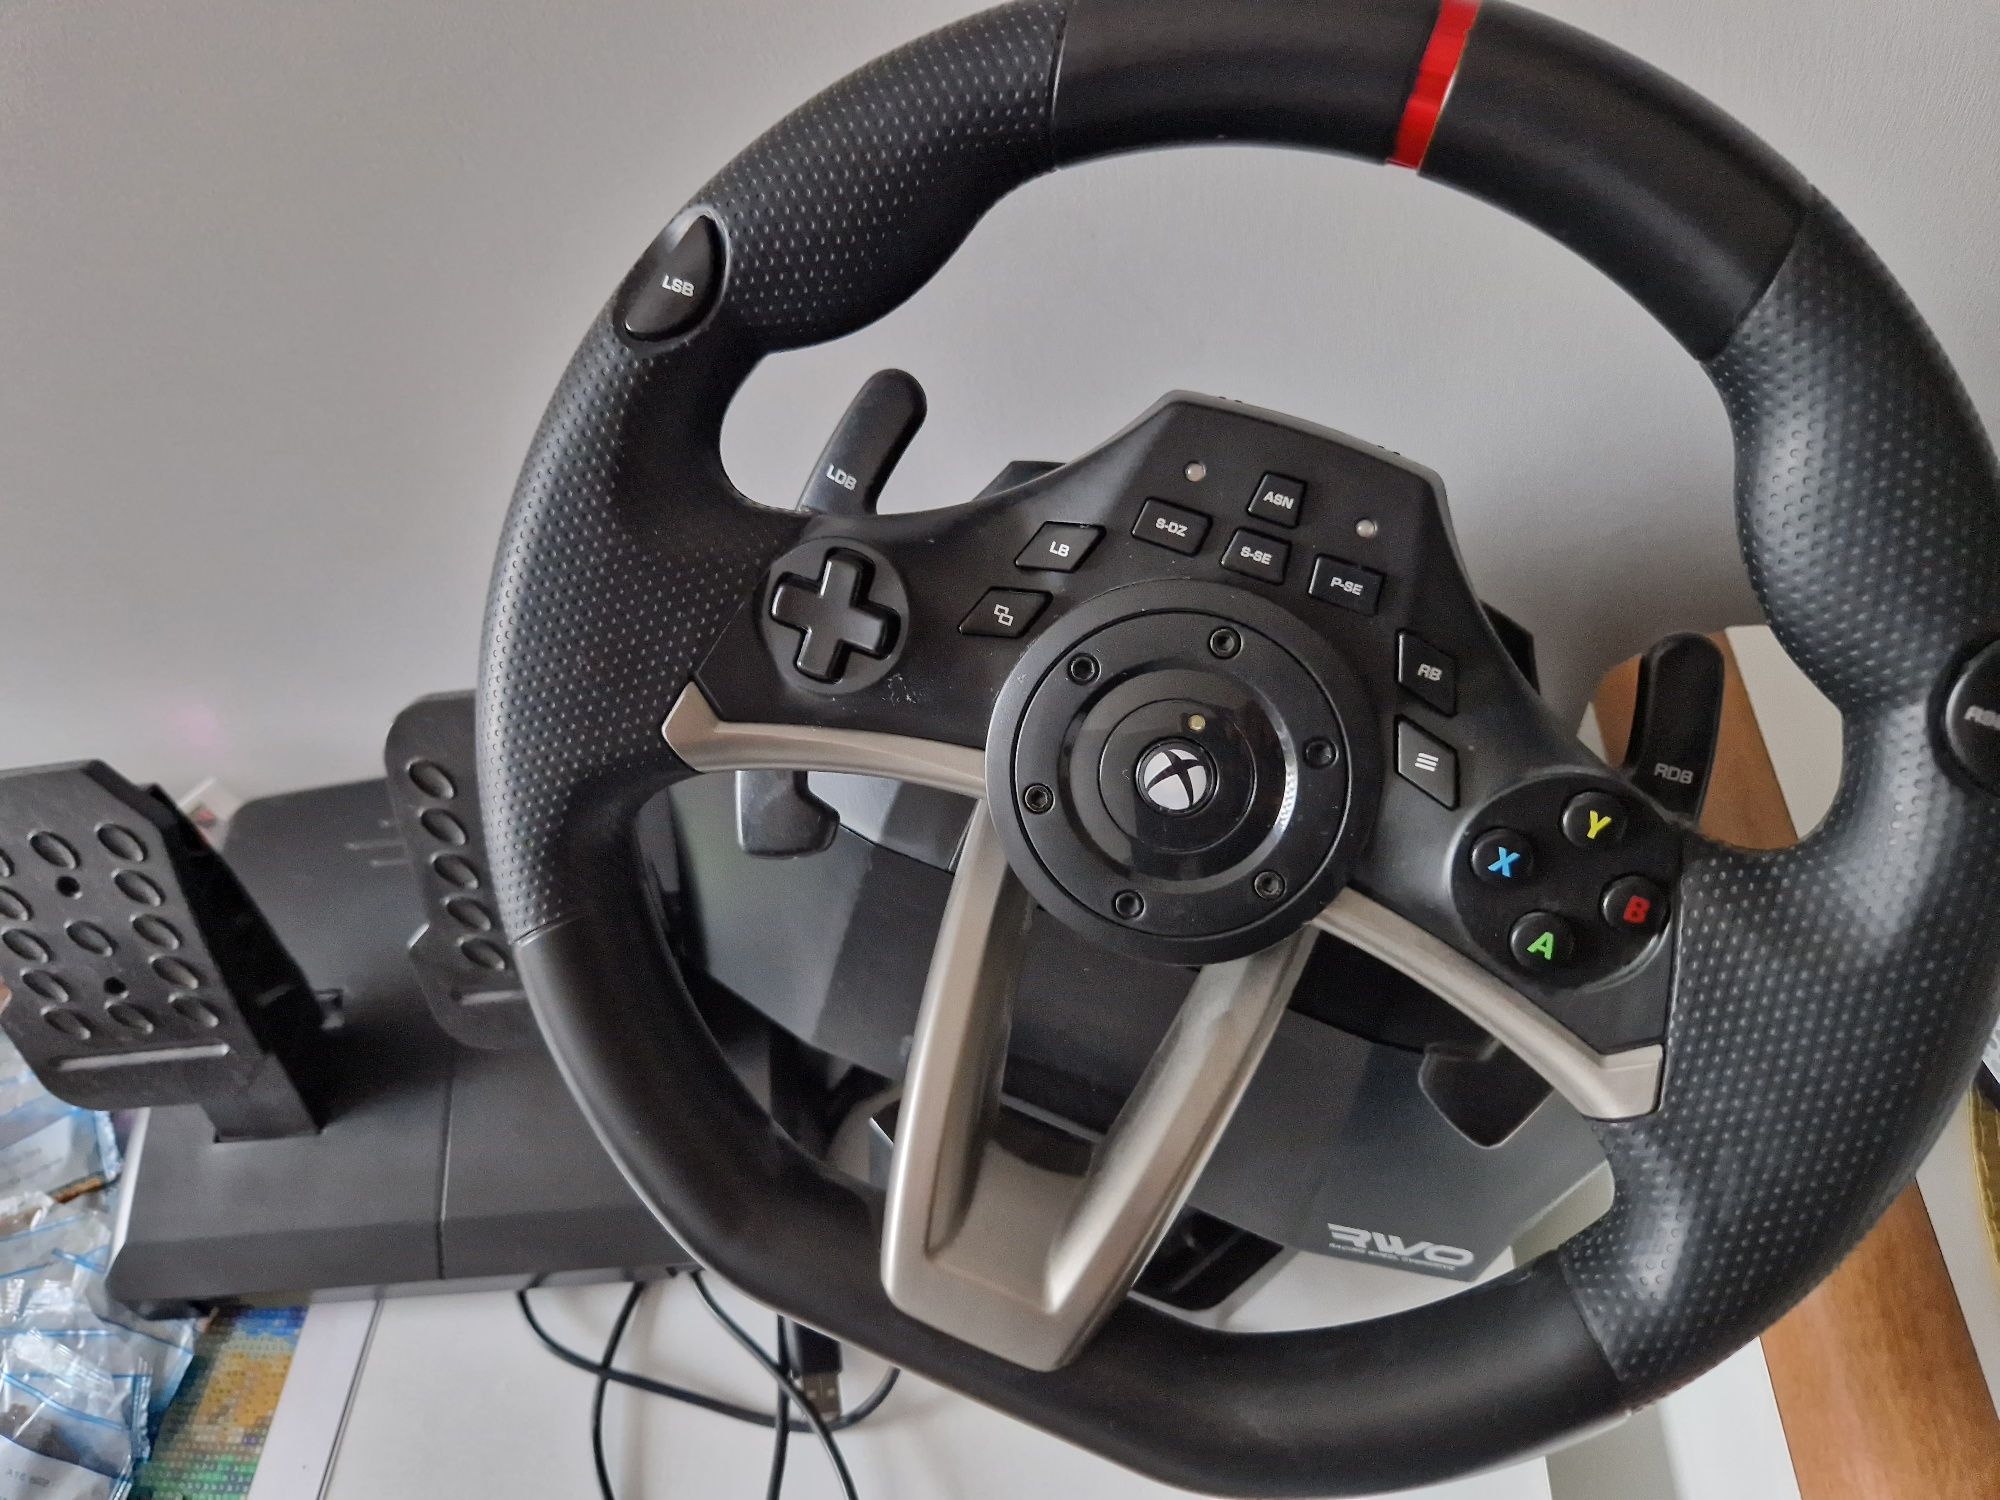 Hori Racing Wheel kierownica Xbox One & Series S/X